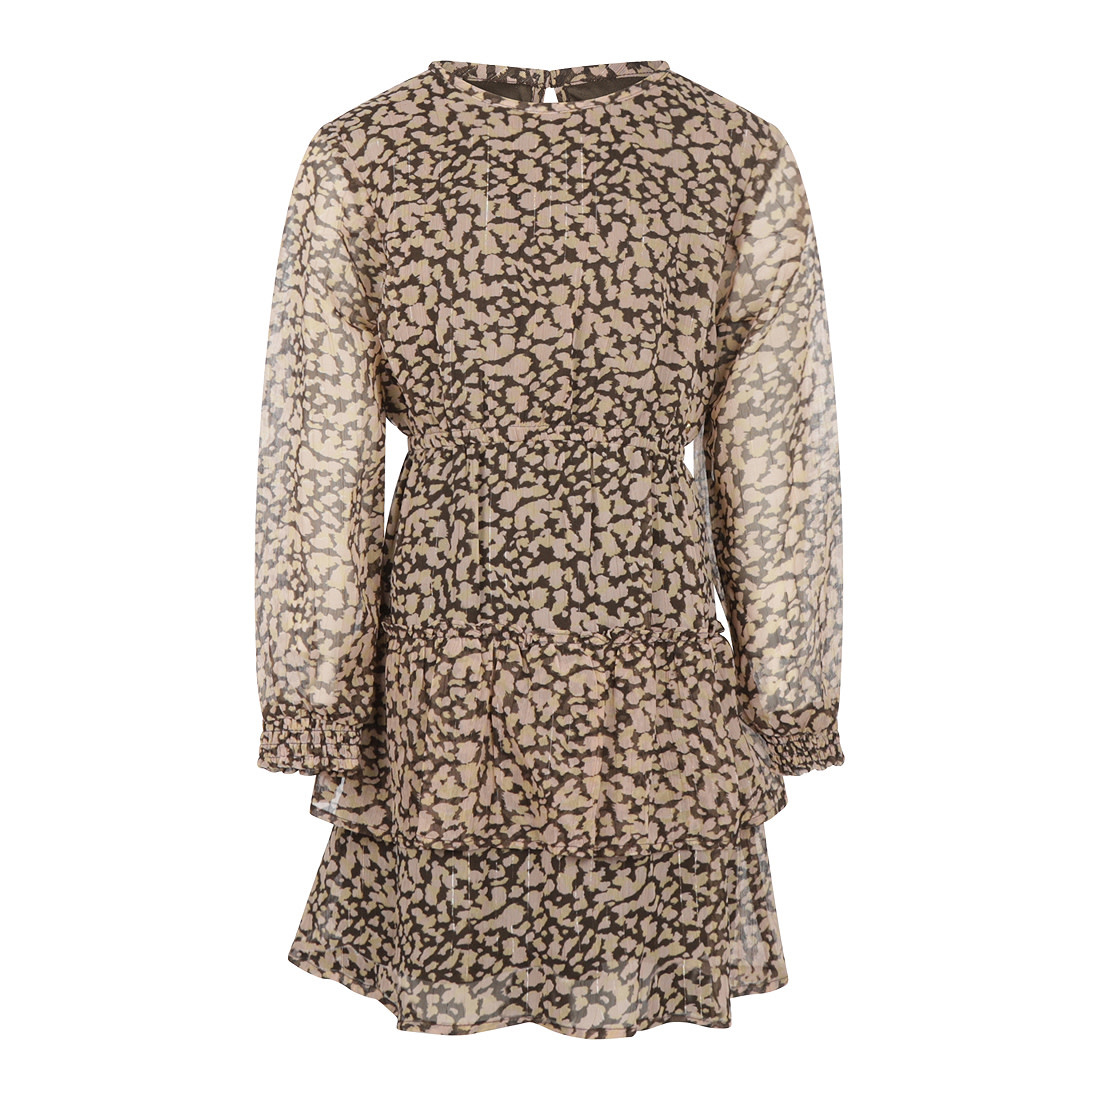 Chiffon Leopard Print Dress with Lurex Pinstripe